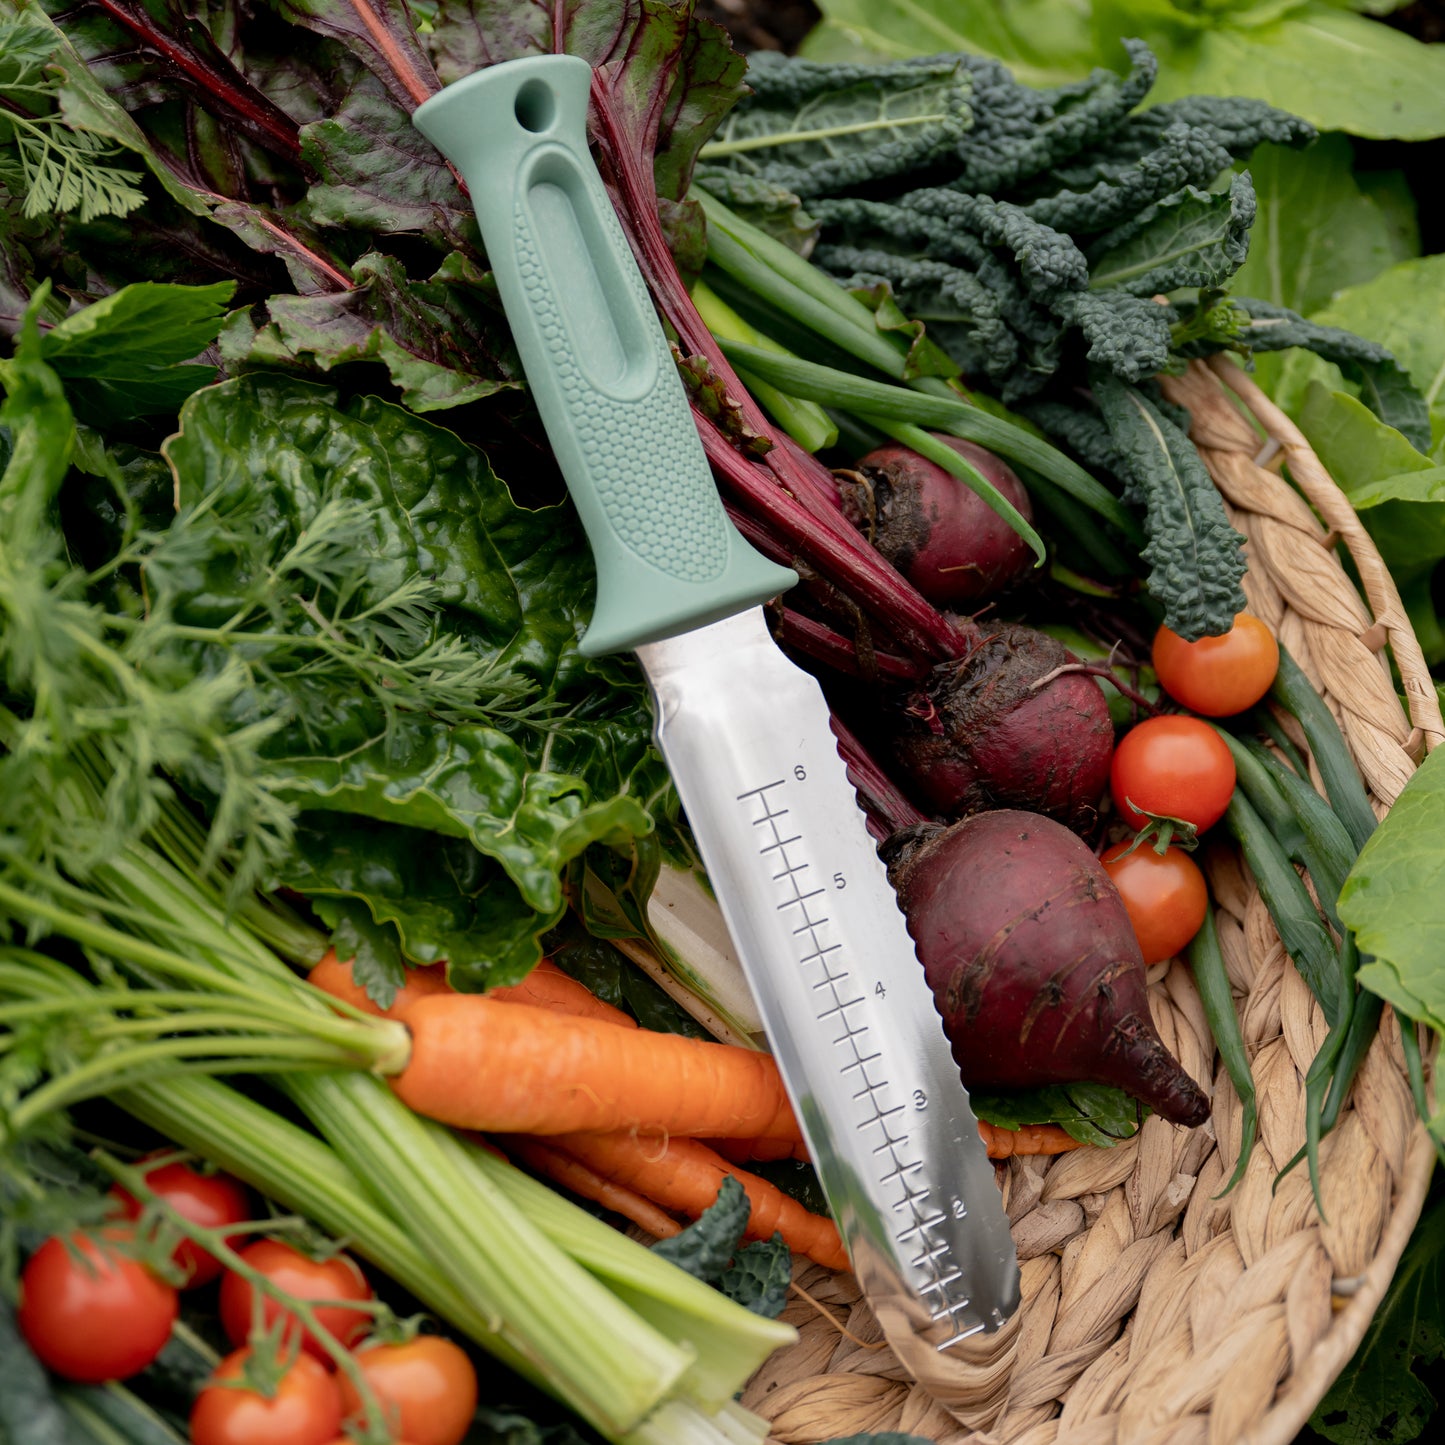 garden knife lying in a basket on top of fresh produce